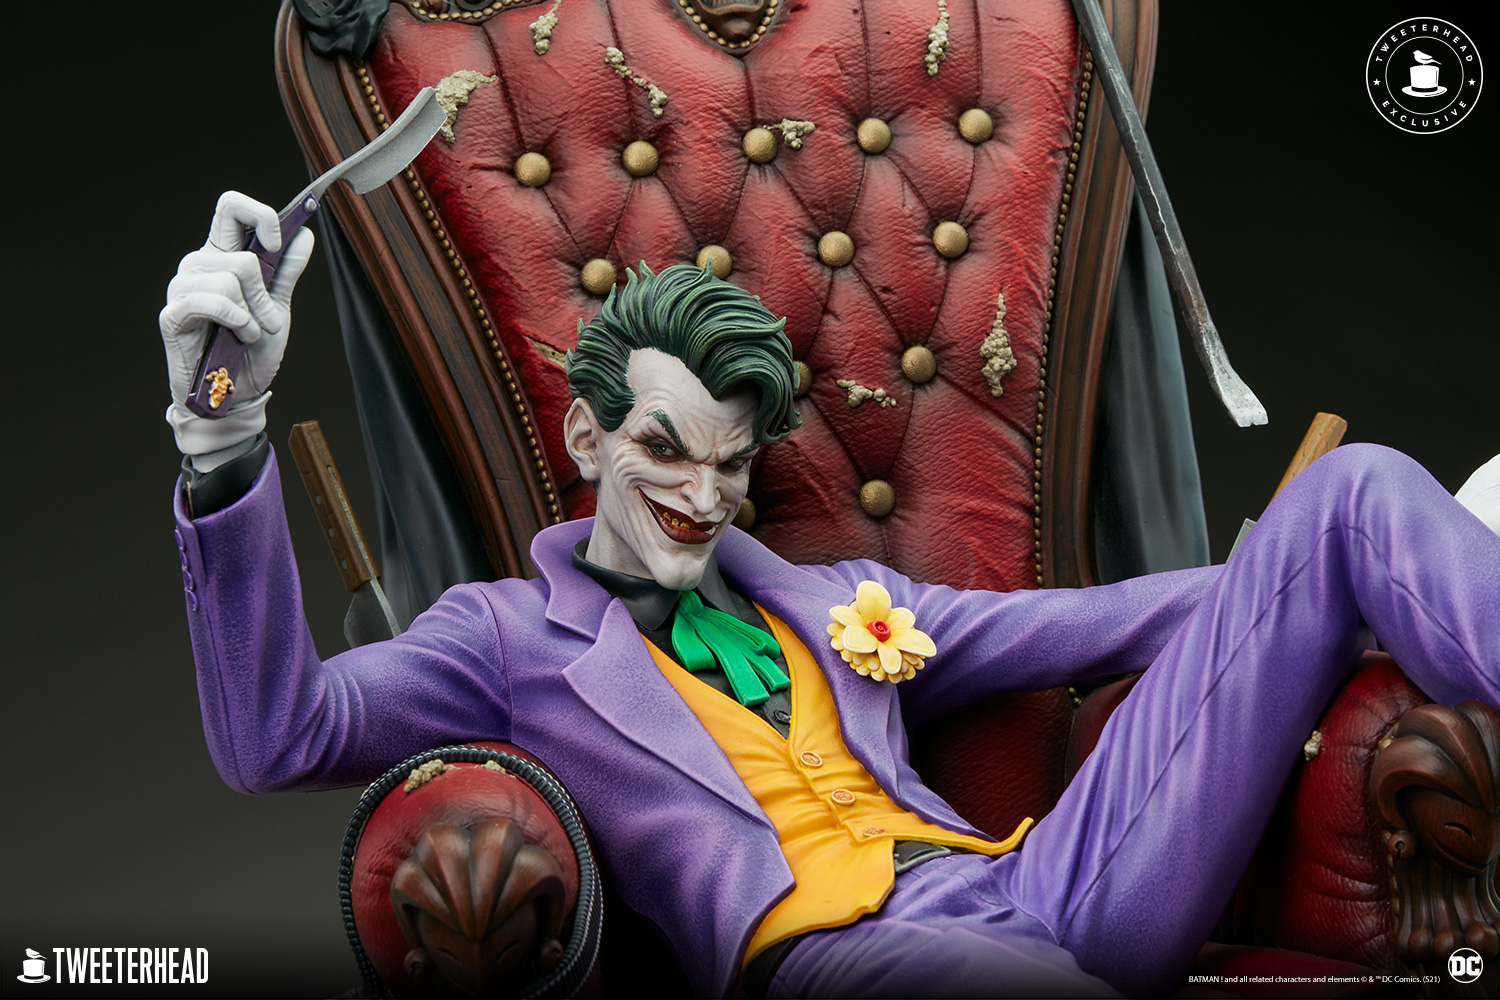 Tweeterhead Joker Maquetter